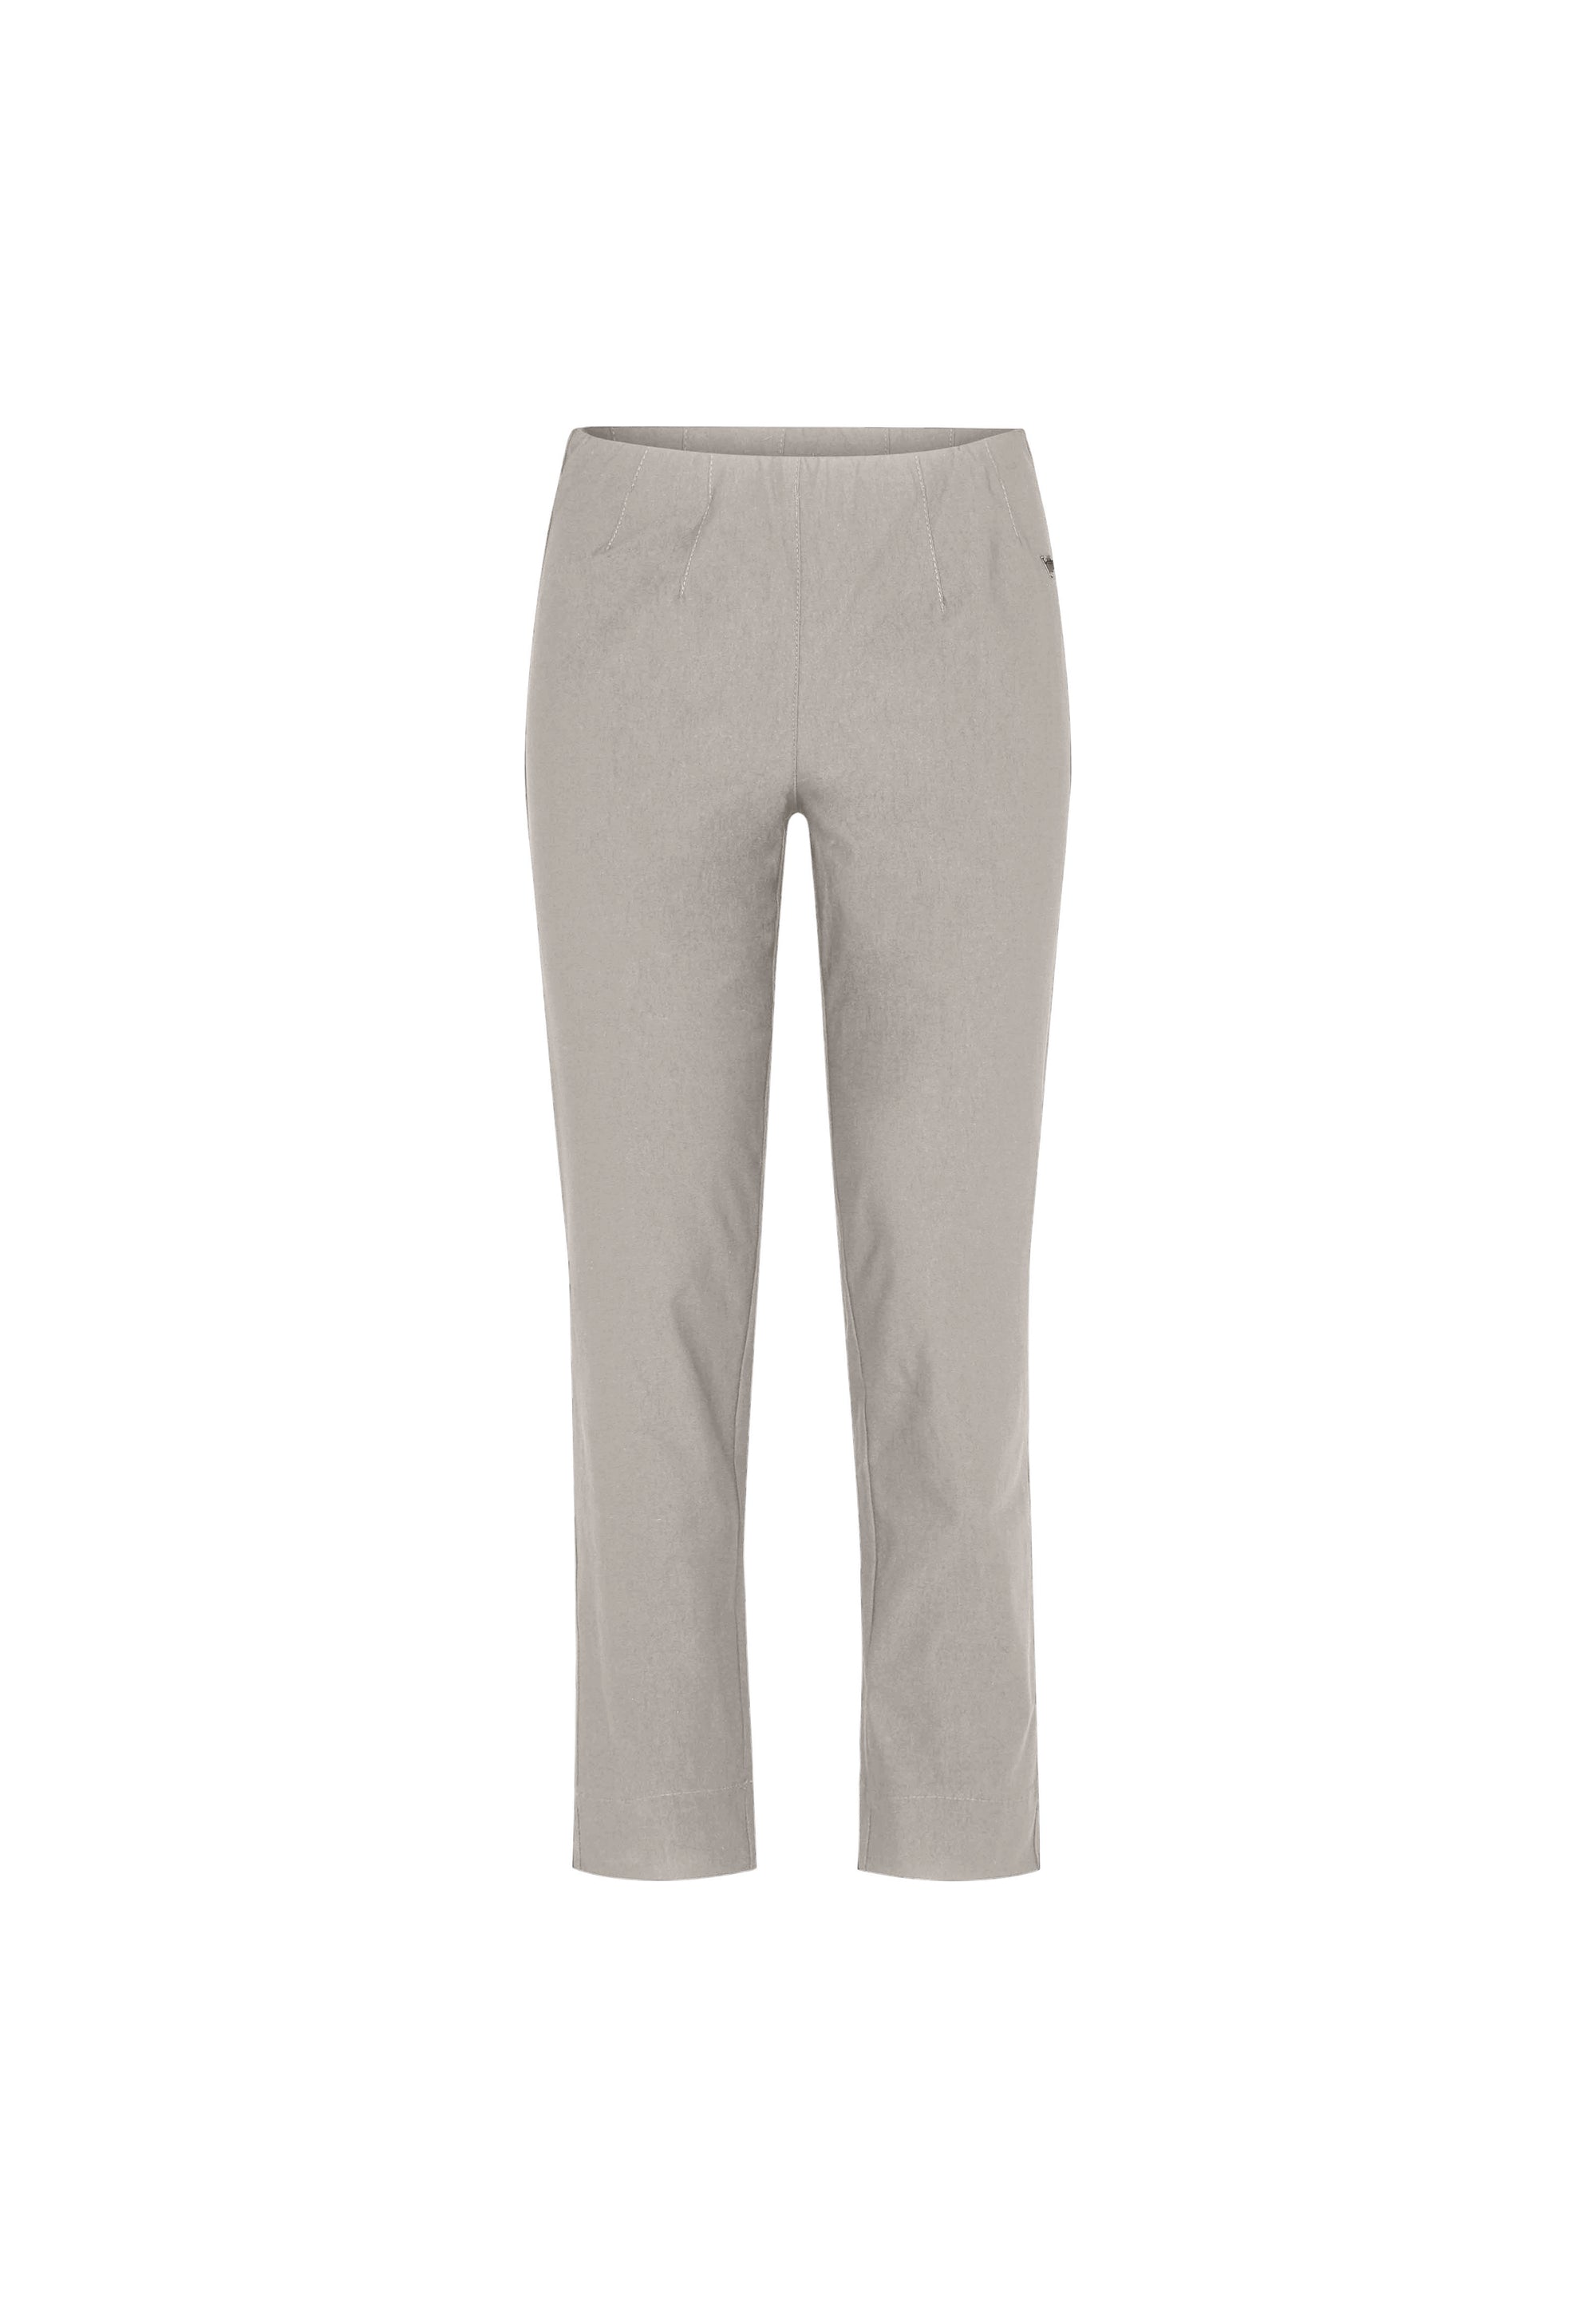 LAURIE Betty Regular - Medium Length Trousers REGULAR Grau sand